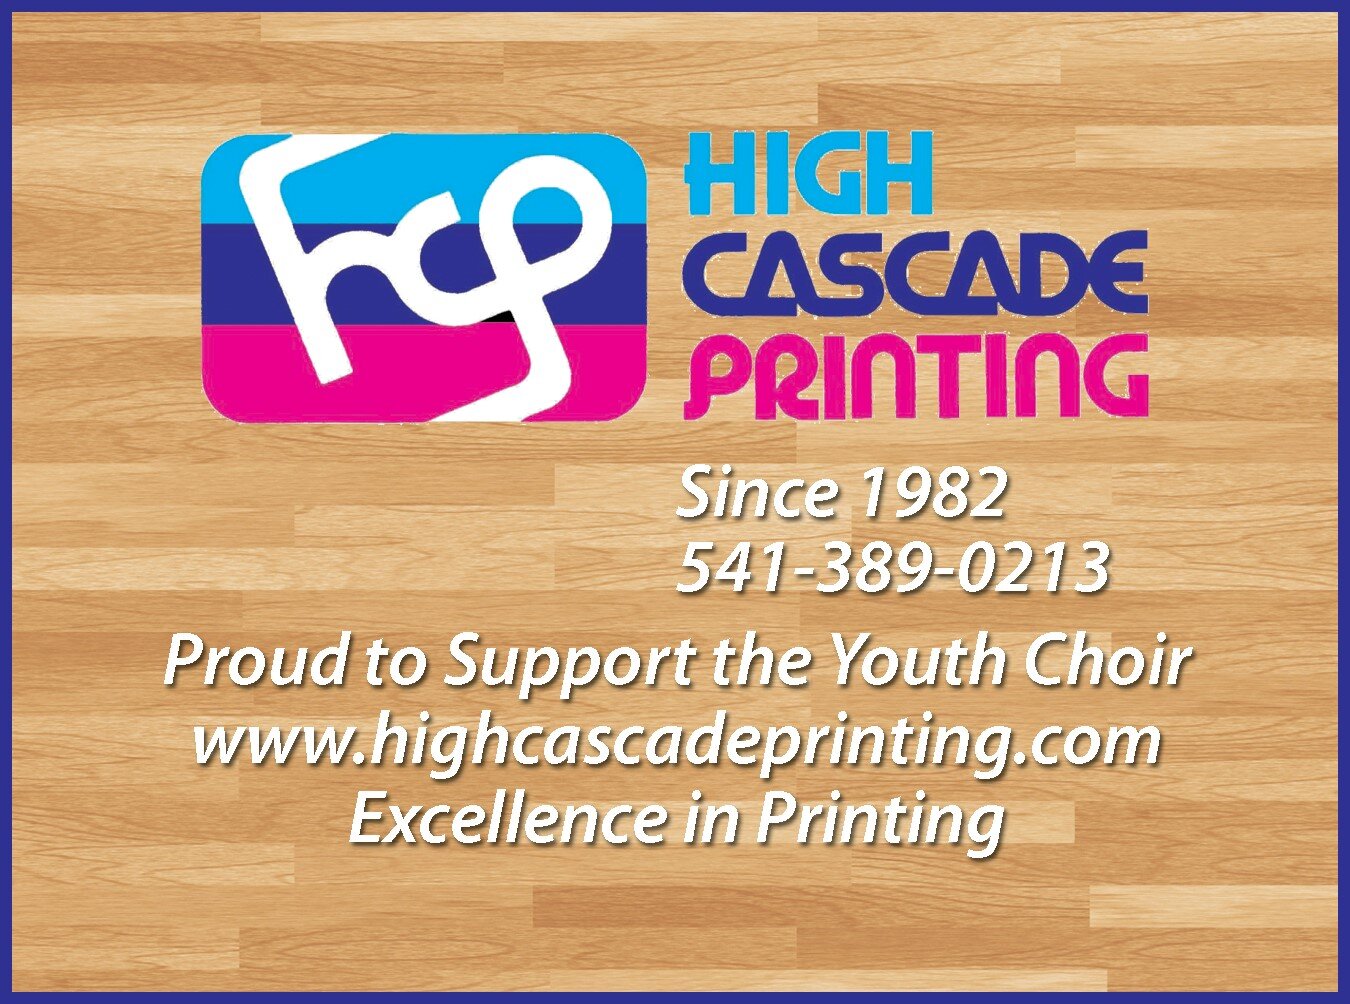 High Cascade Printing.jpg